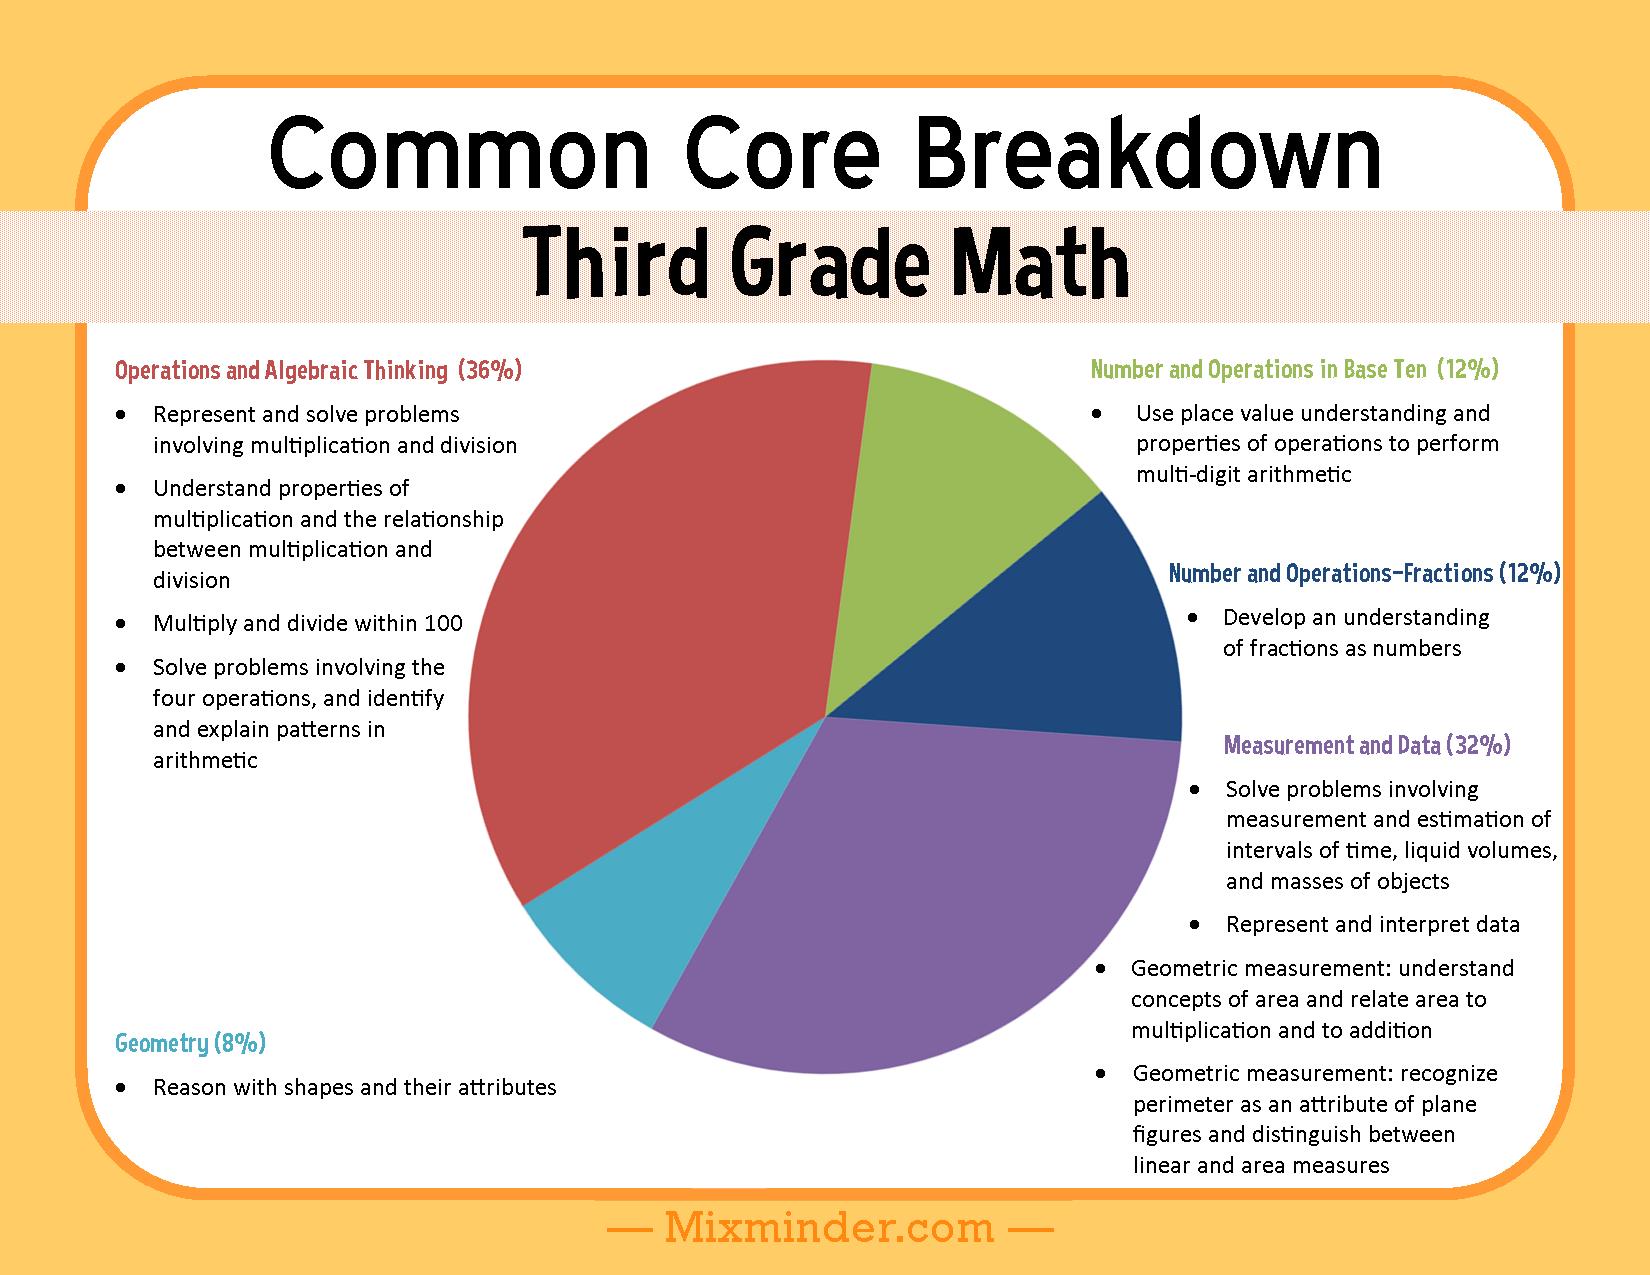 Third Grade Math Common Core Breakdown